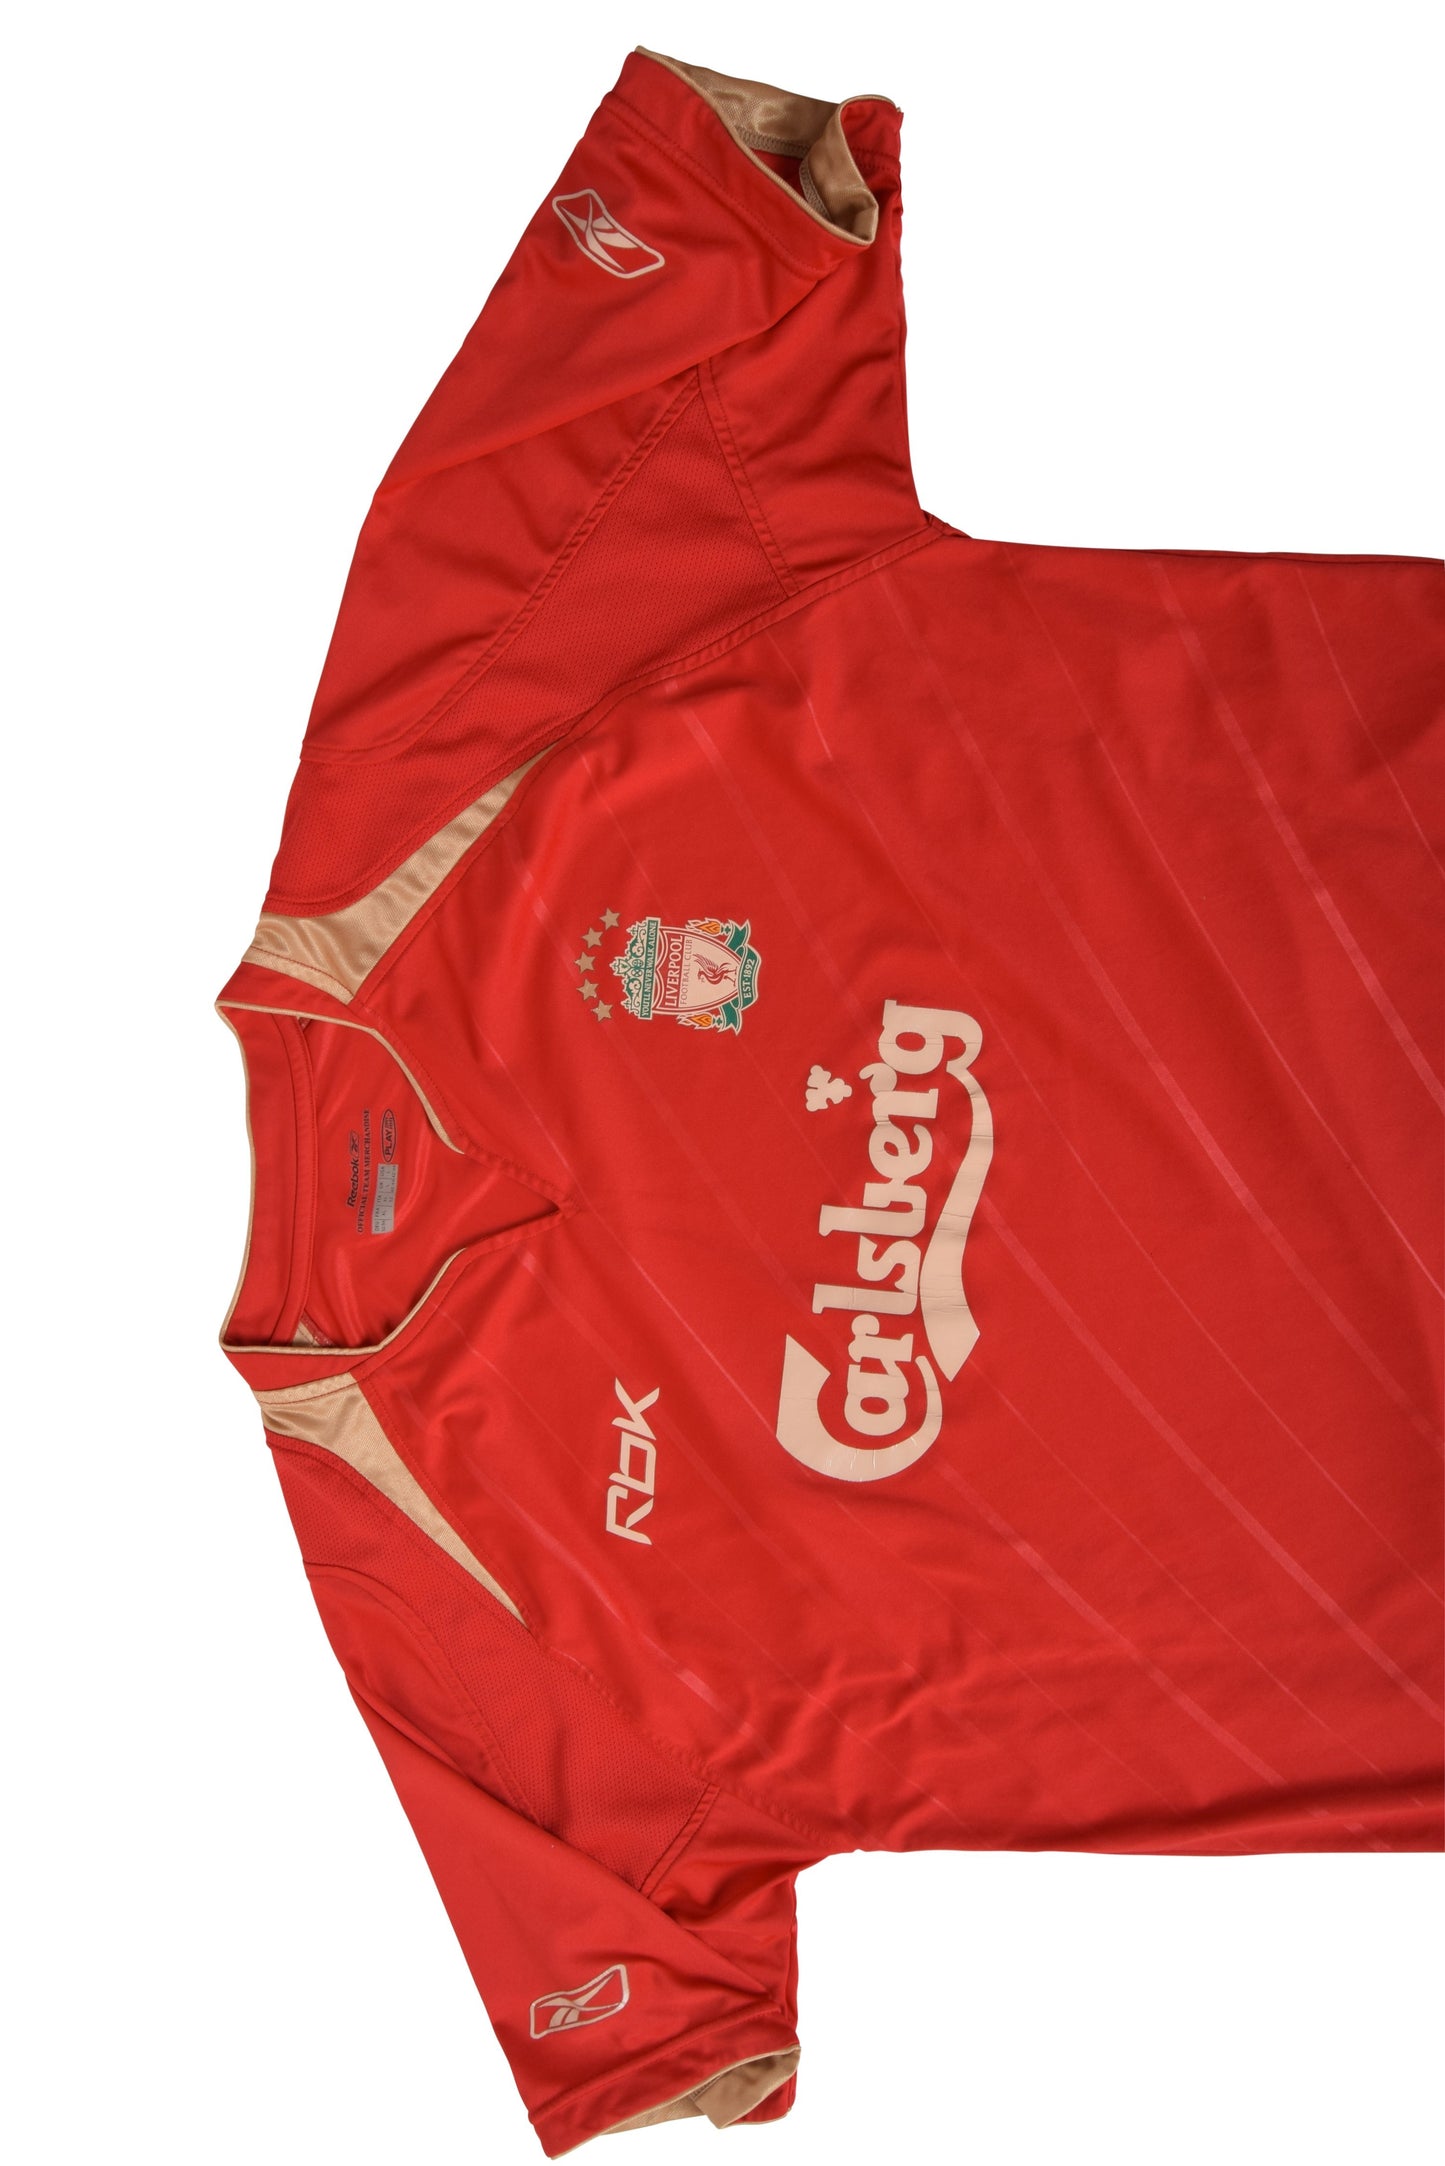 Liverpool Reebok 2005-2006 Home Football Shirt Red Carlsberg Size L - XL